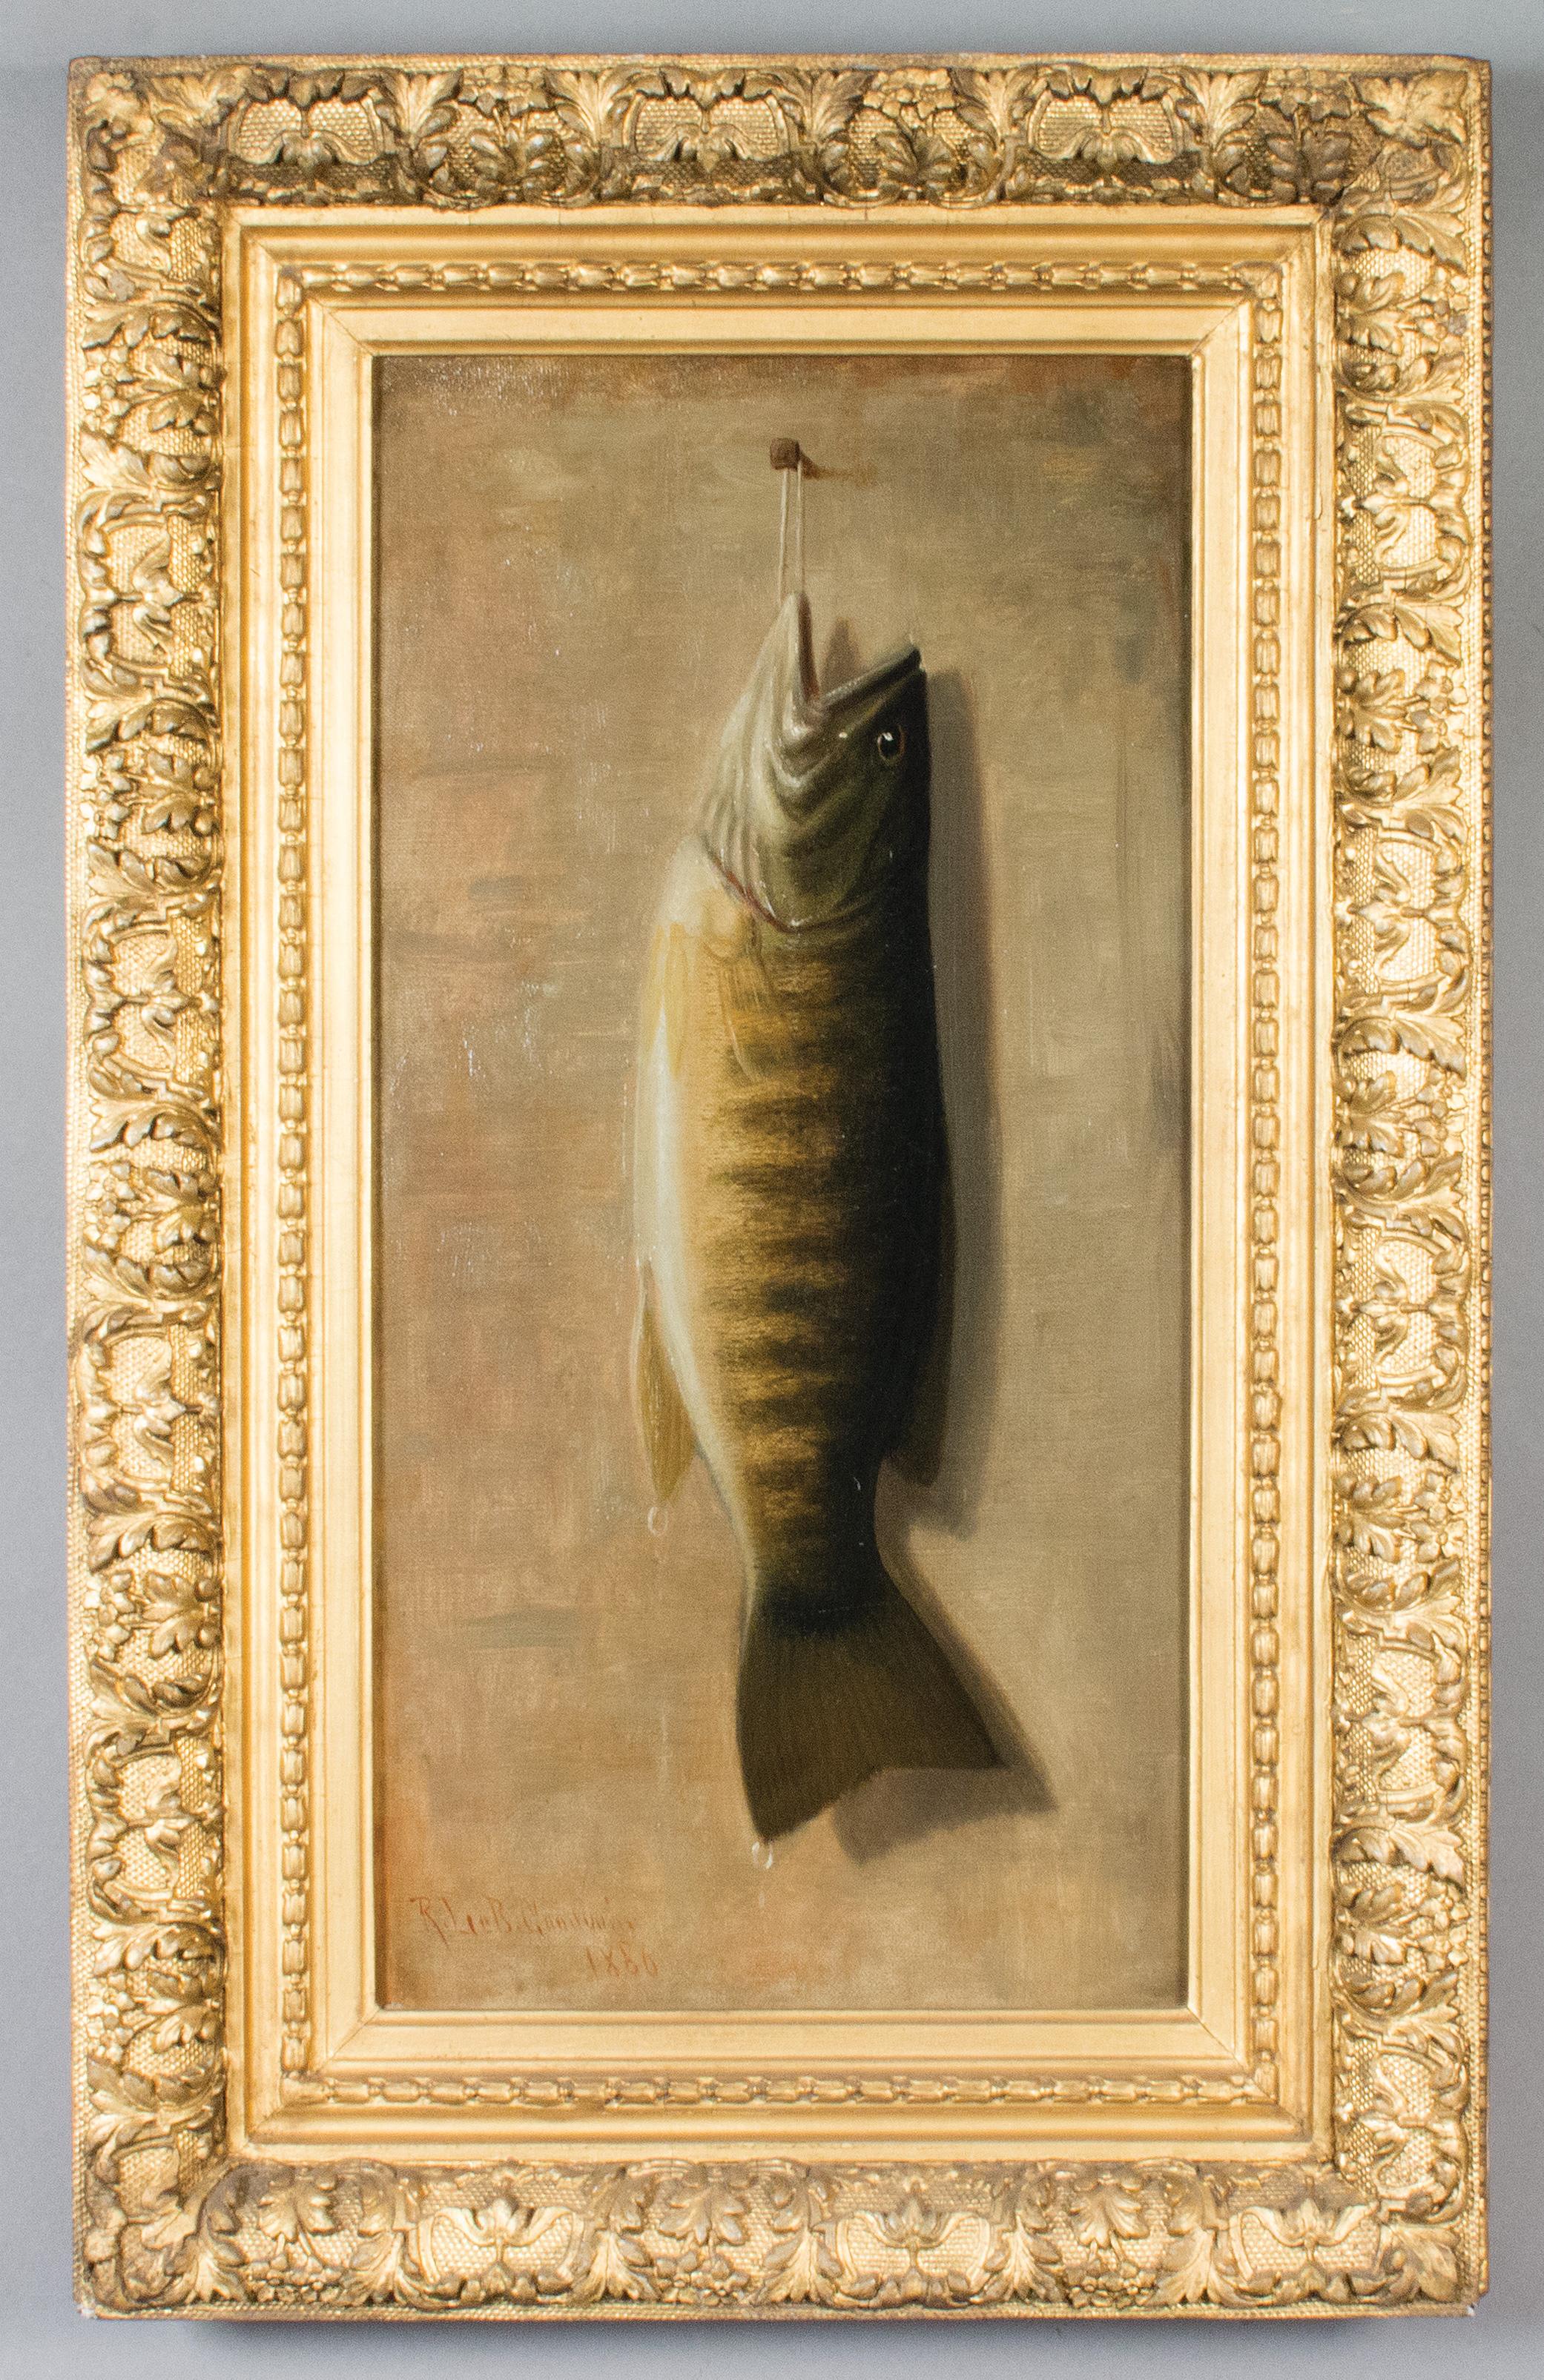 Richard Labarre Goodwin Animal Painting – Trophäenfisch von Upstate New York Künstler Richard Goodwin, 1860